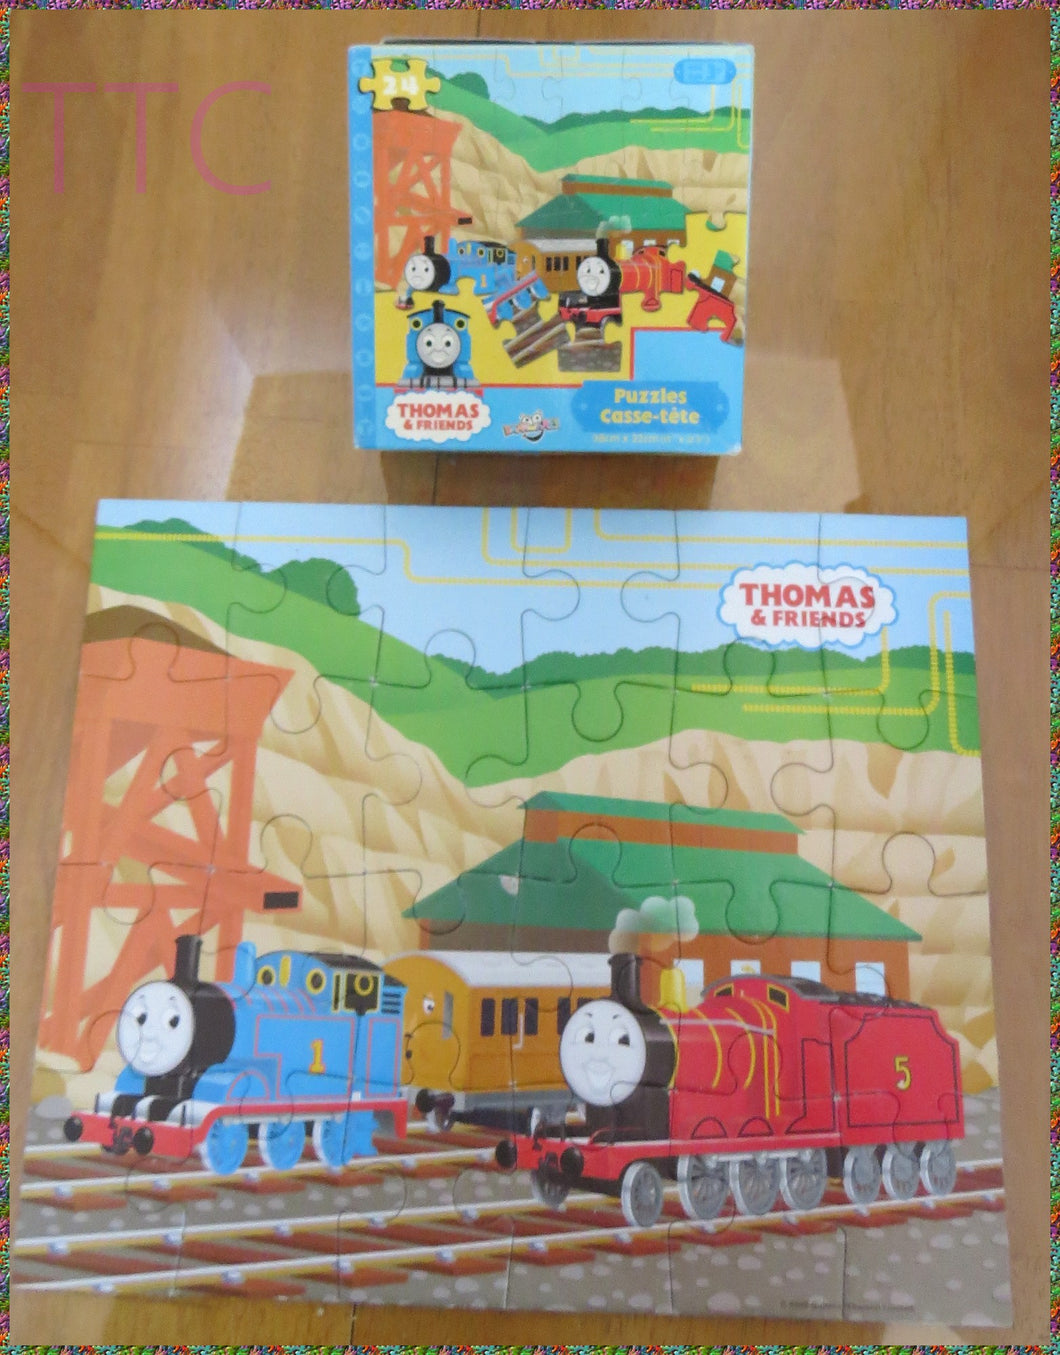 Puzzle THOMAS THE TRAIN - 24 pcs - complete w box